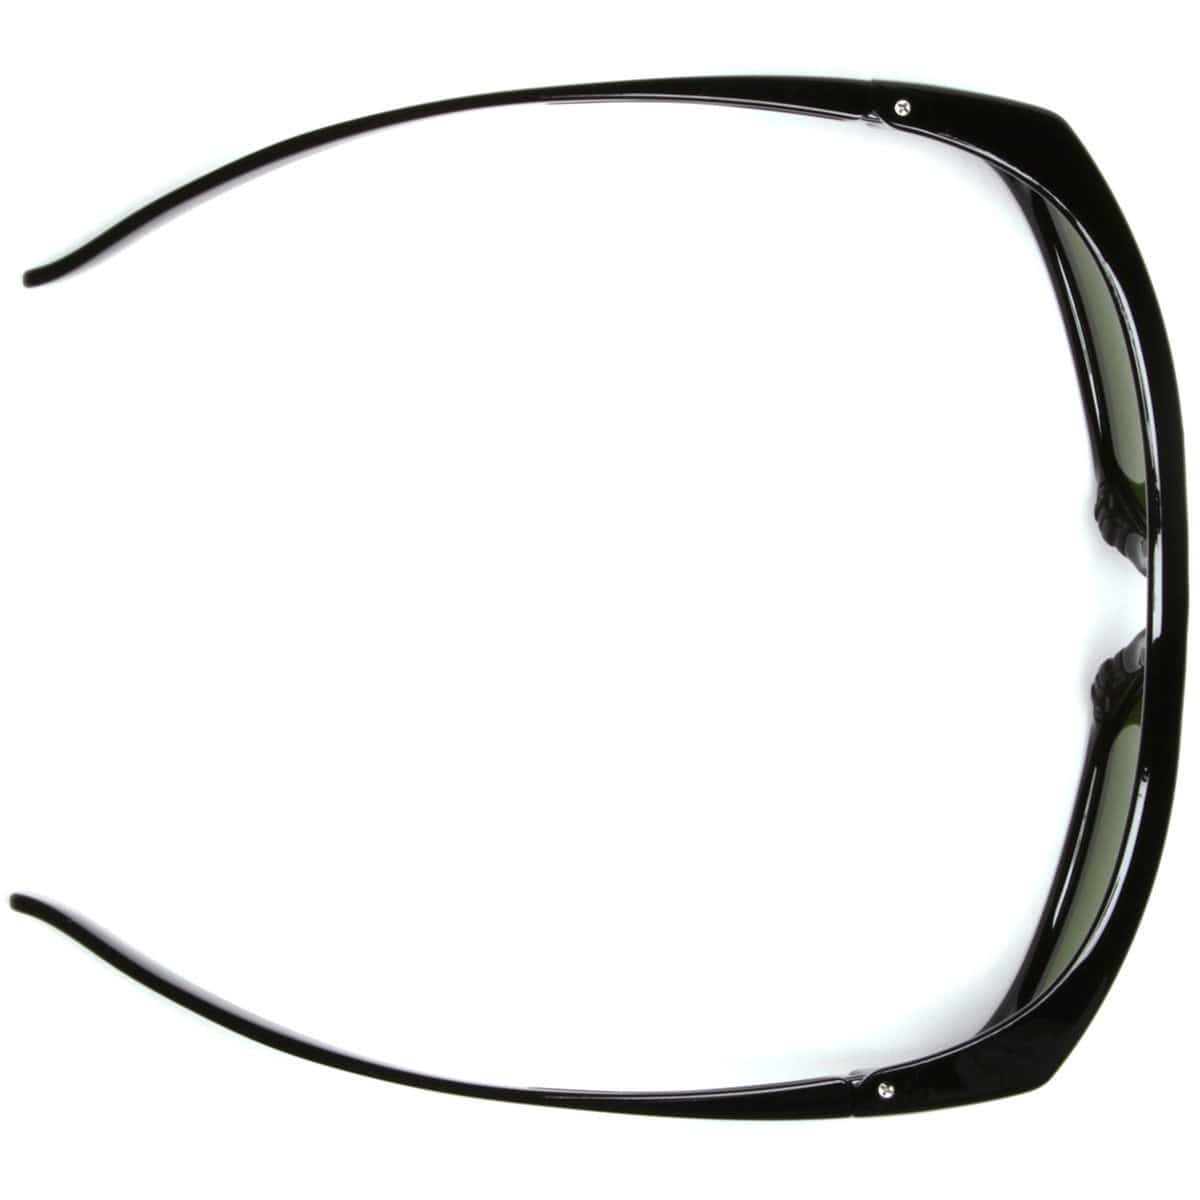 Pyramex Emerge Safety Glasses Black Frame IR Shade 3.0 Lens SB7960SF Top